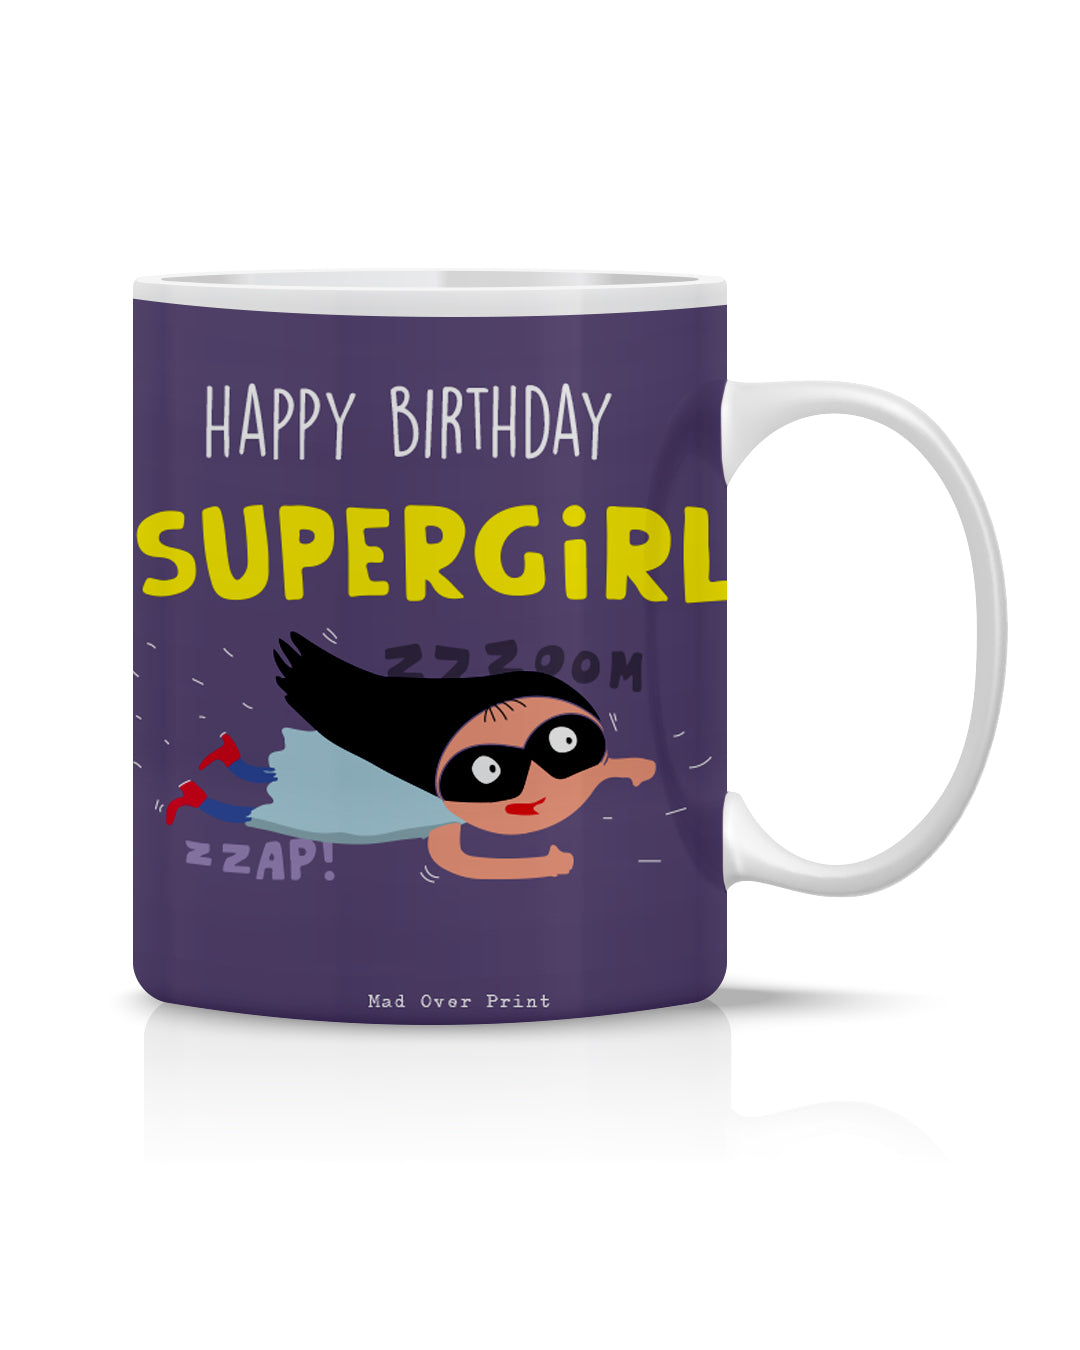 Happy Birthday Super girl Mug